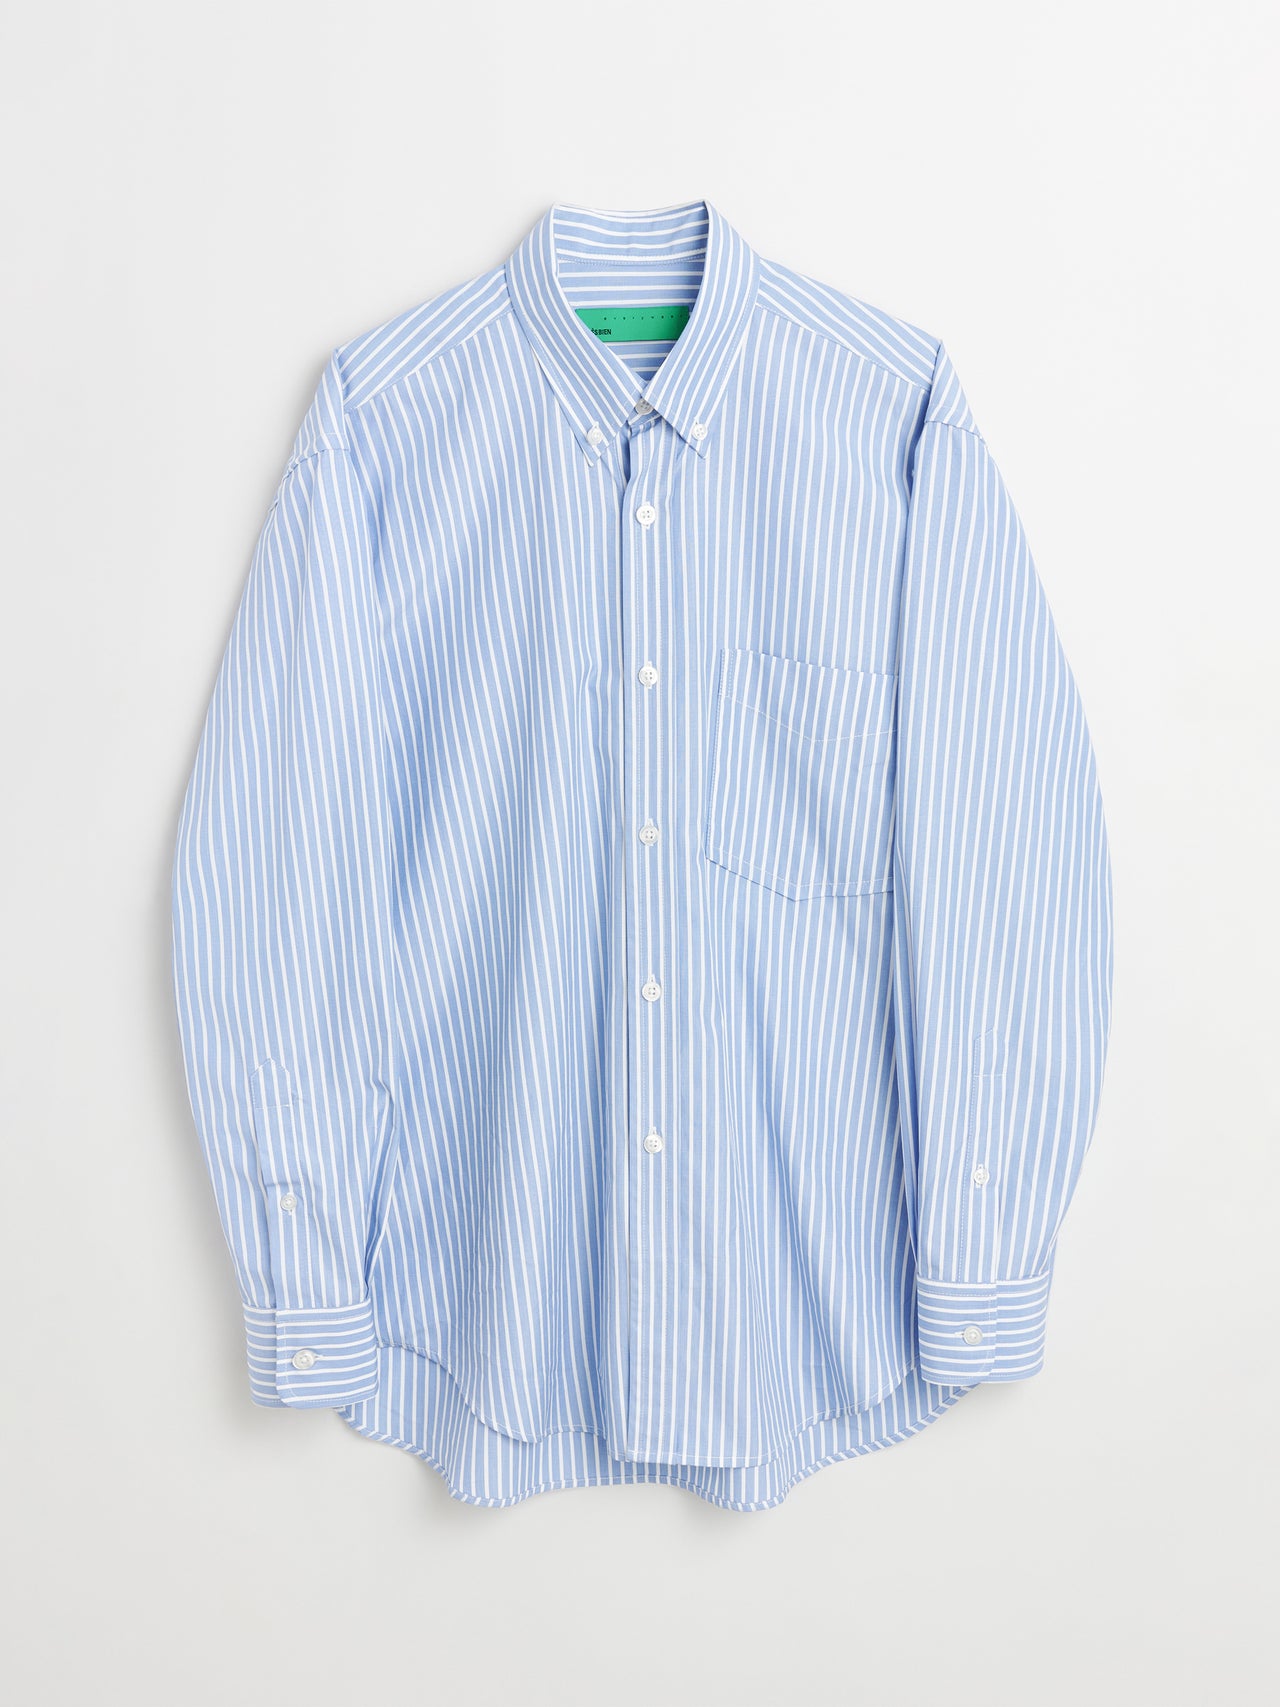 TRÈS BIEN everywear Oversized BD Classic Shirt Cotton Blue Stripe